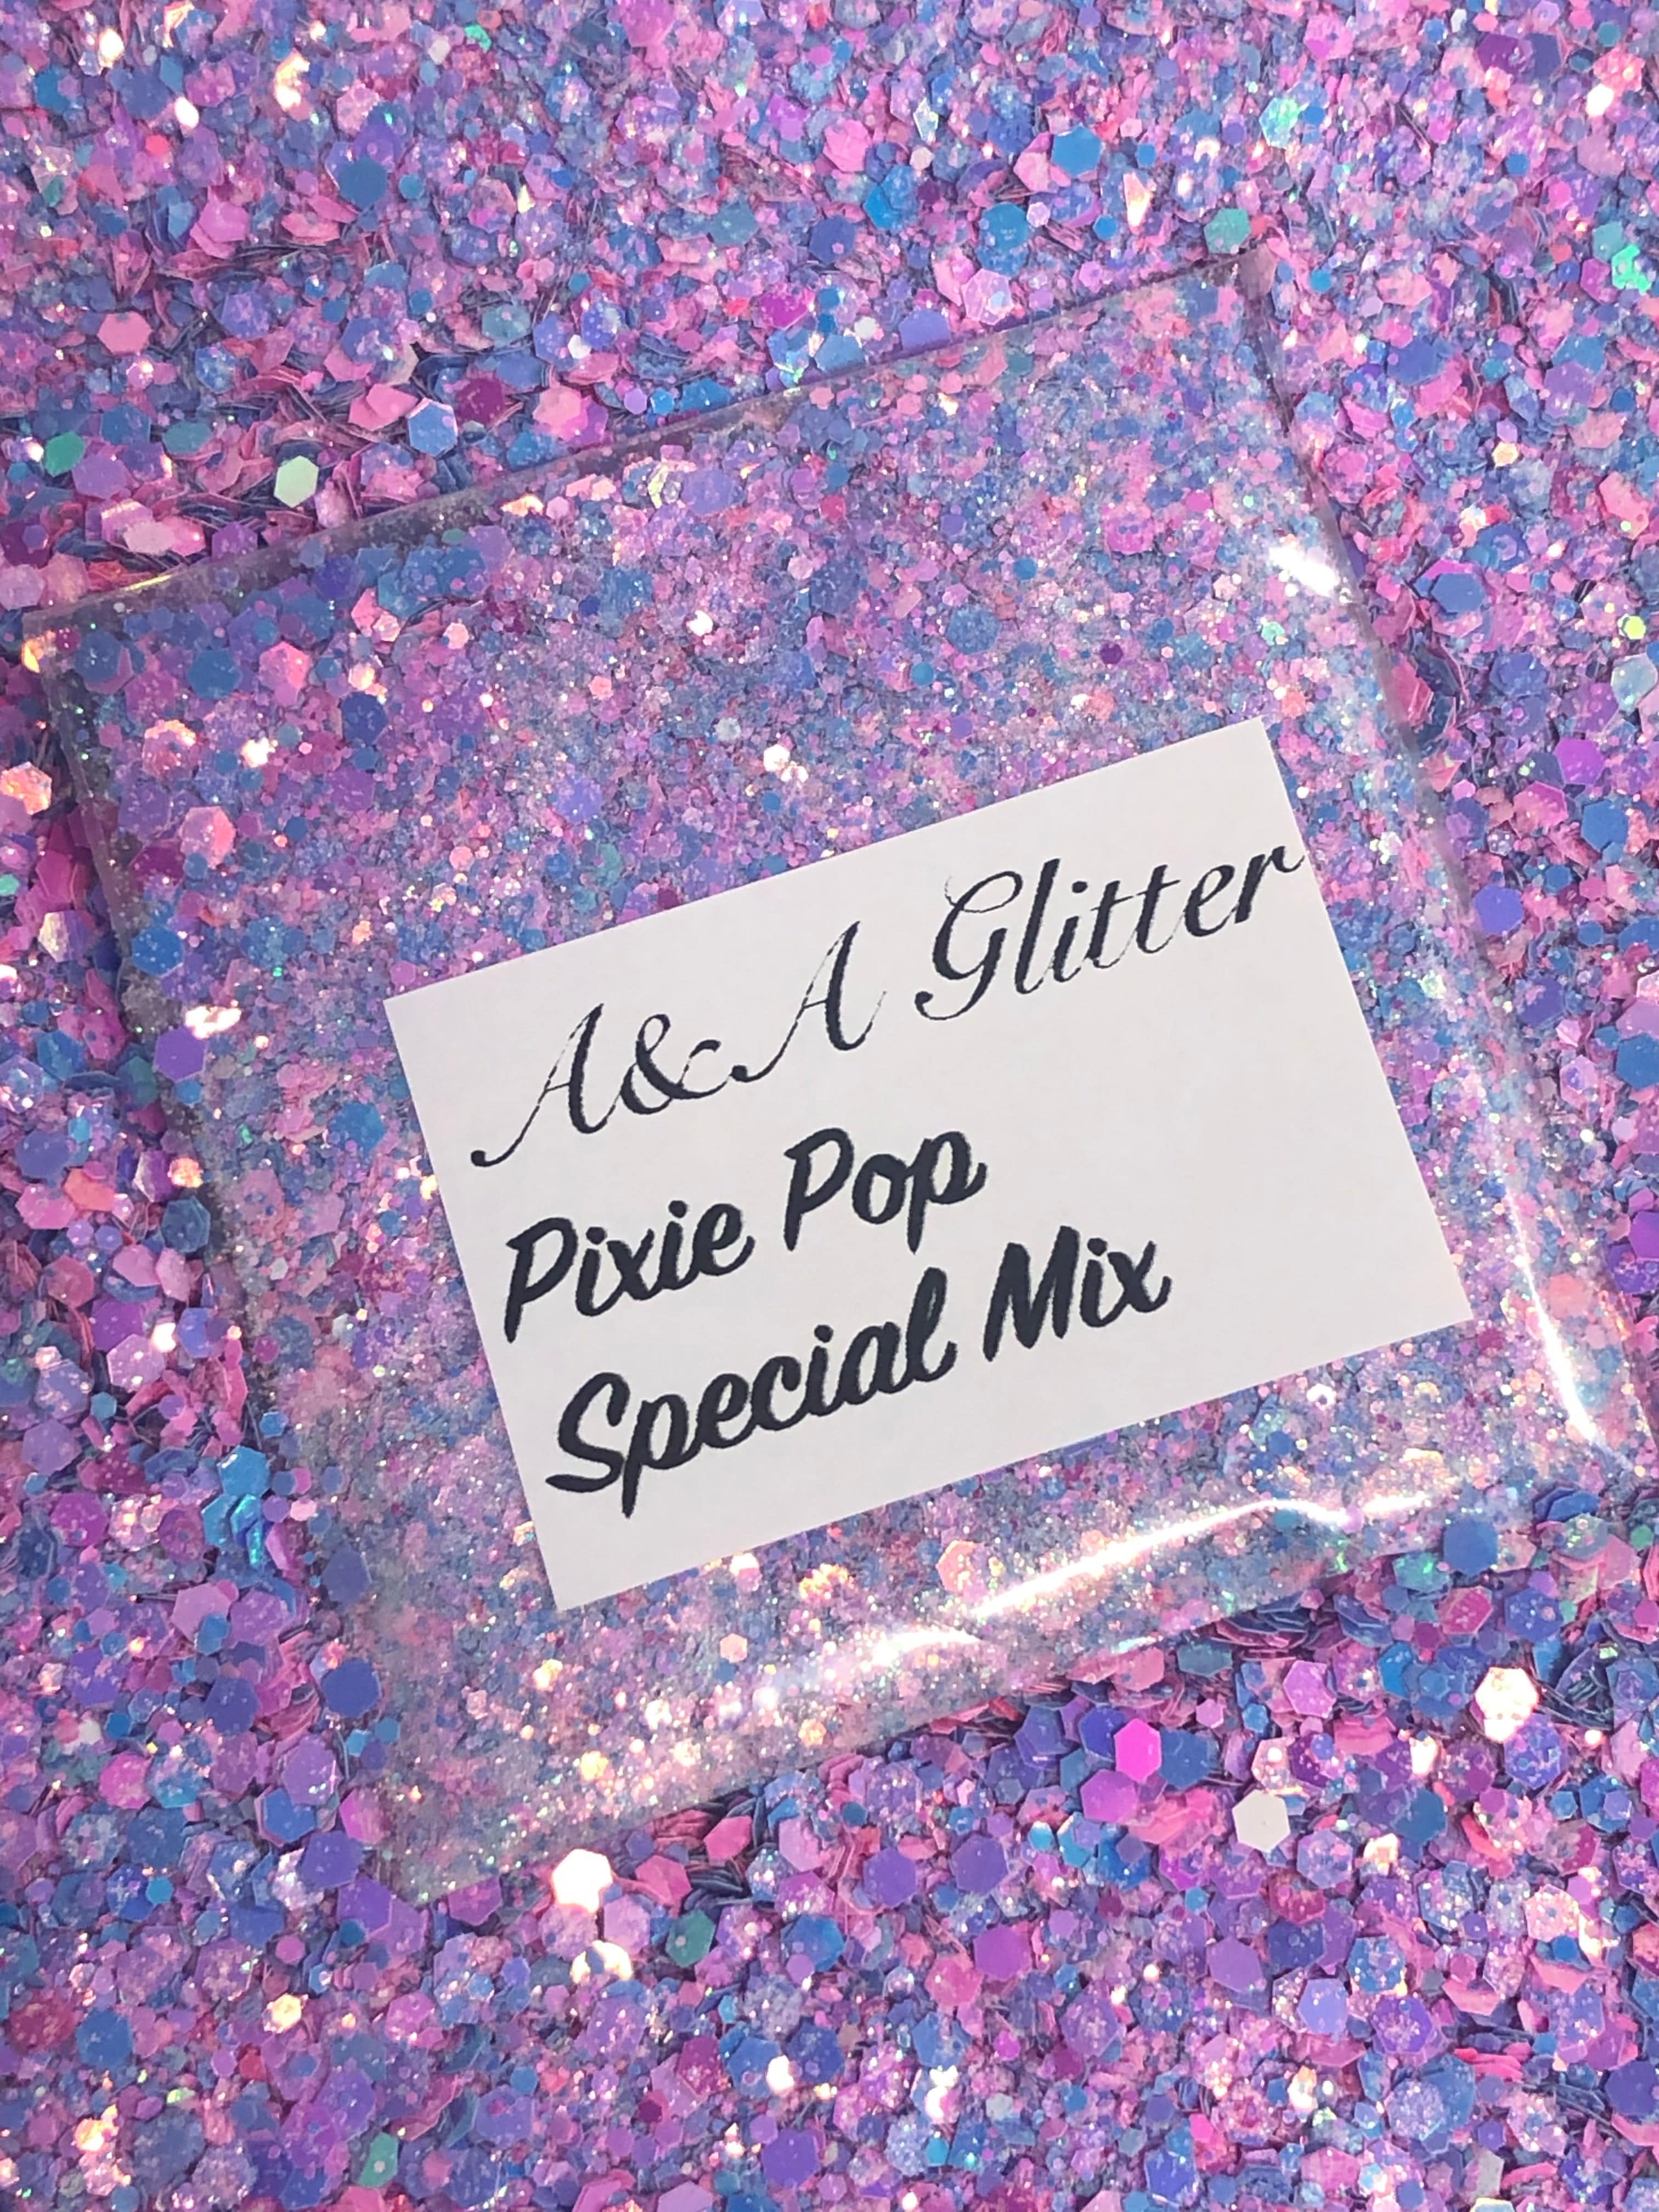 Pixie Pop - Special Mix